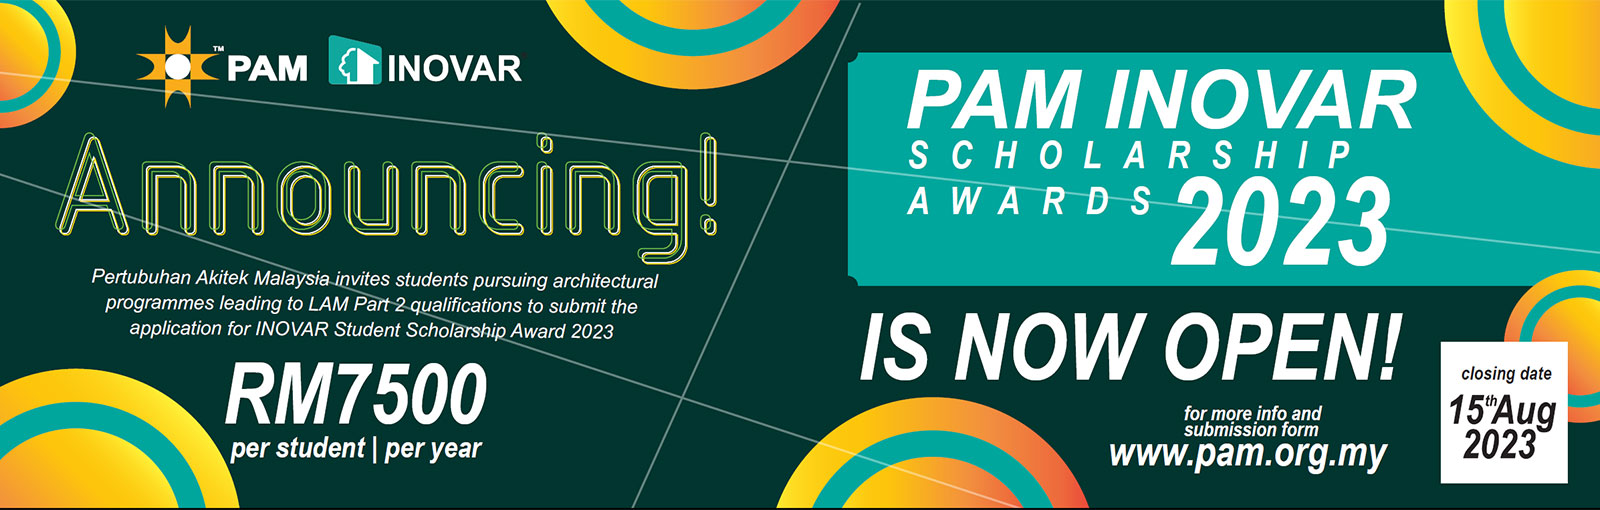 PAM Inovar Scholarship Award 2023